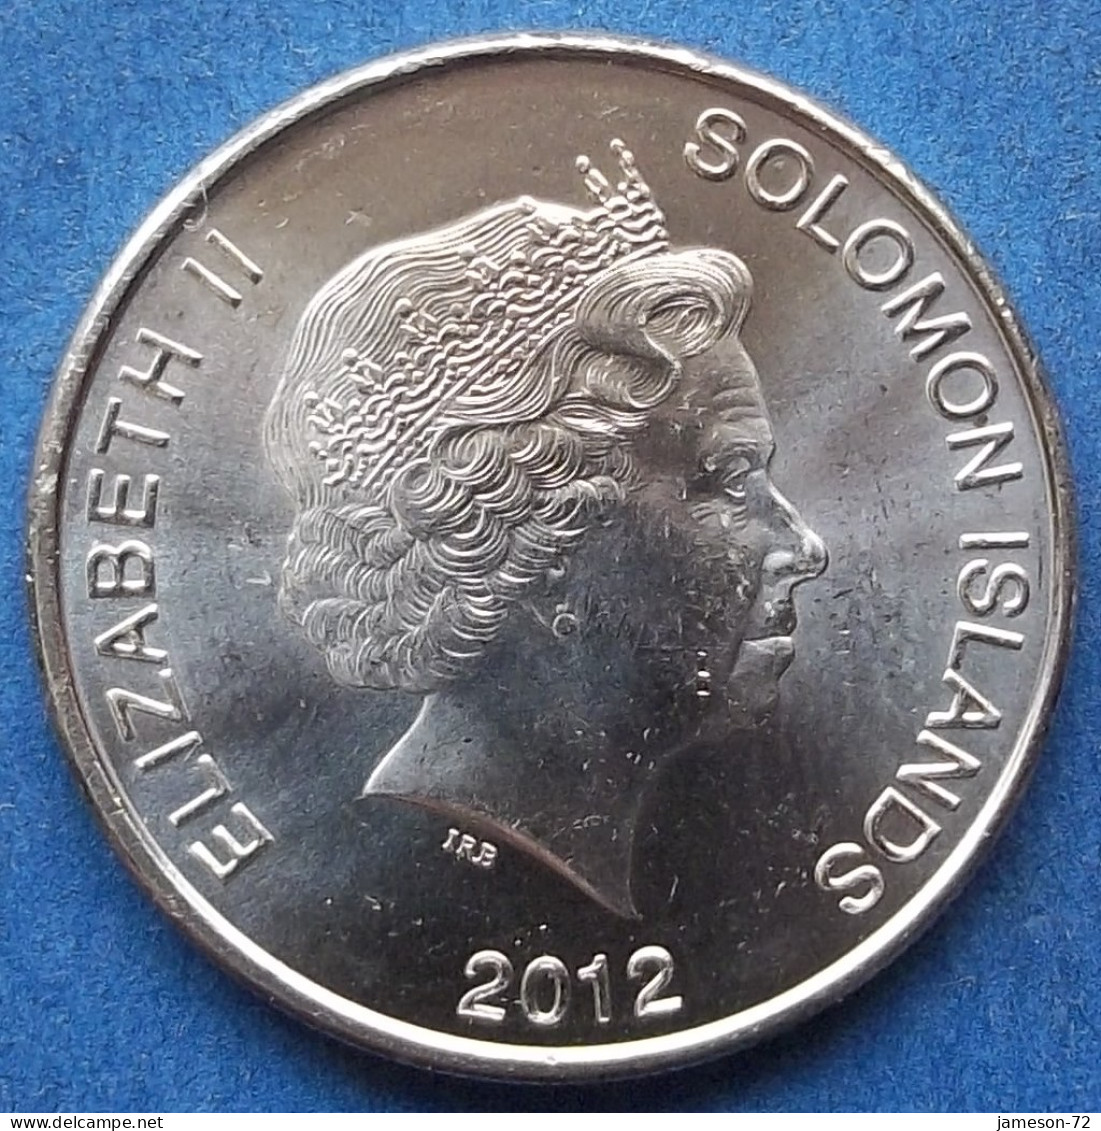 SOLOMON ISLANDS - 50 Censt 2012 "Eagle Spirit" KM# 237 Commonwealth Nation, Elizabeth II - Edelweiss Coins - Solomon Islands